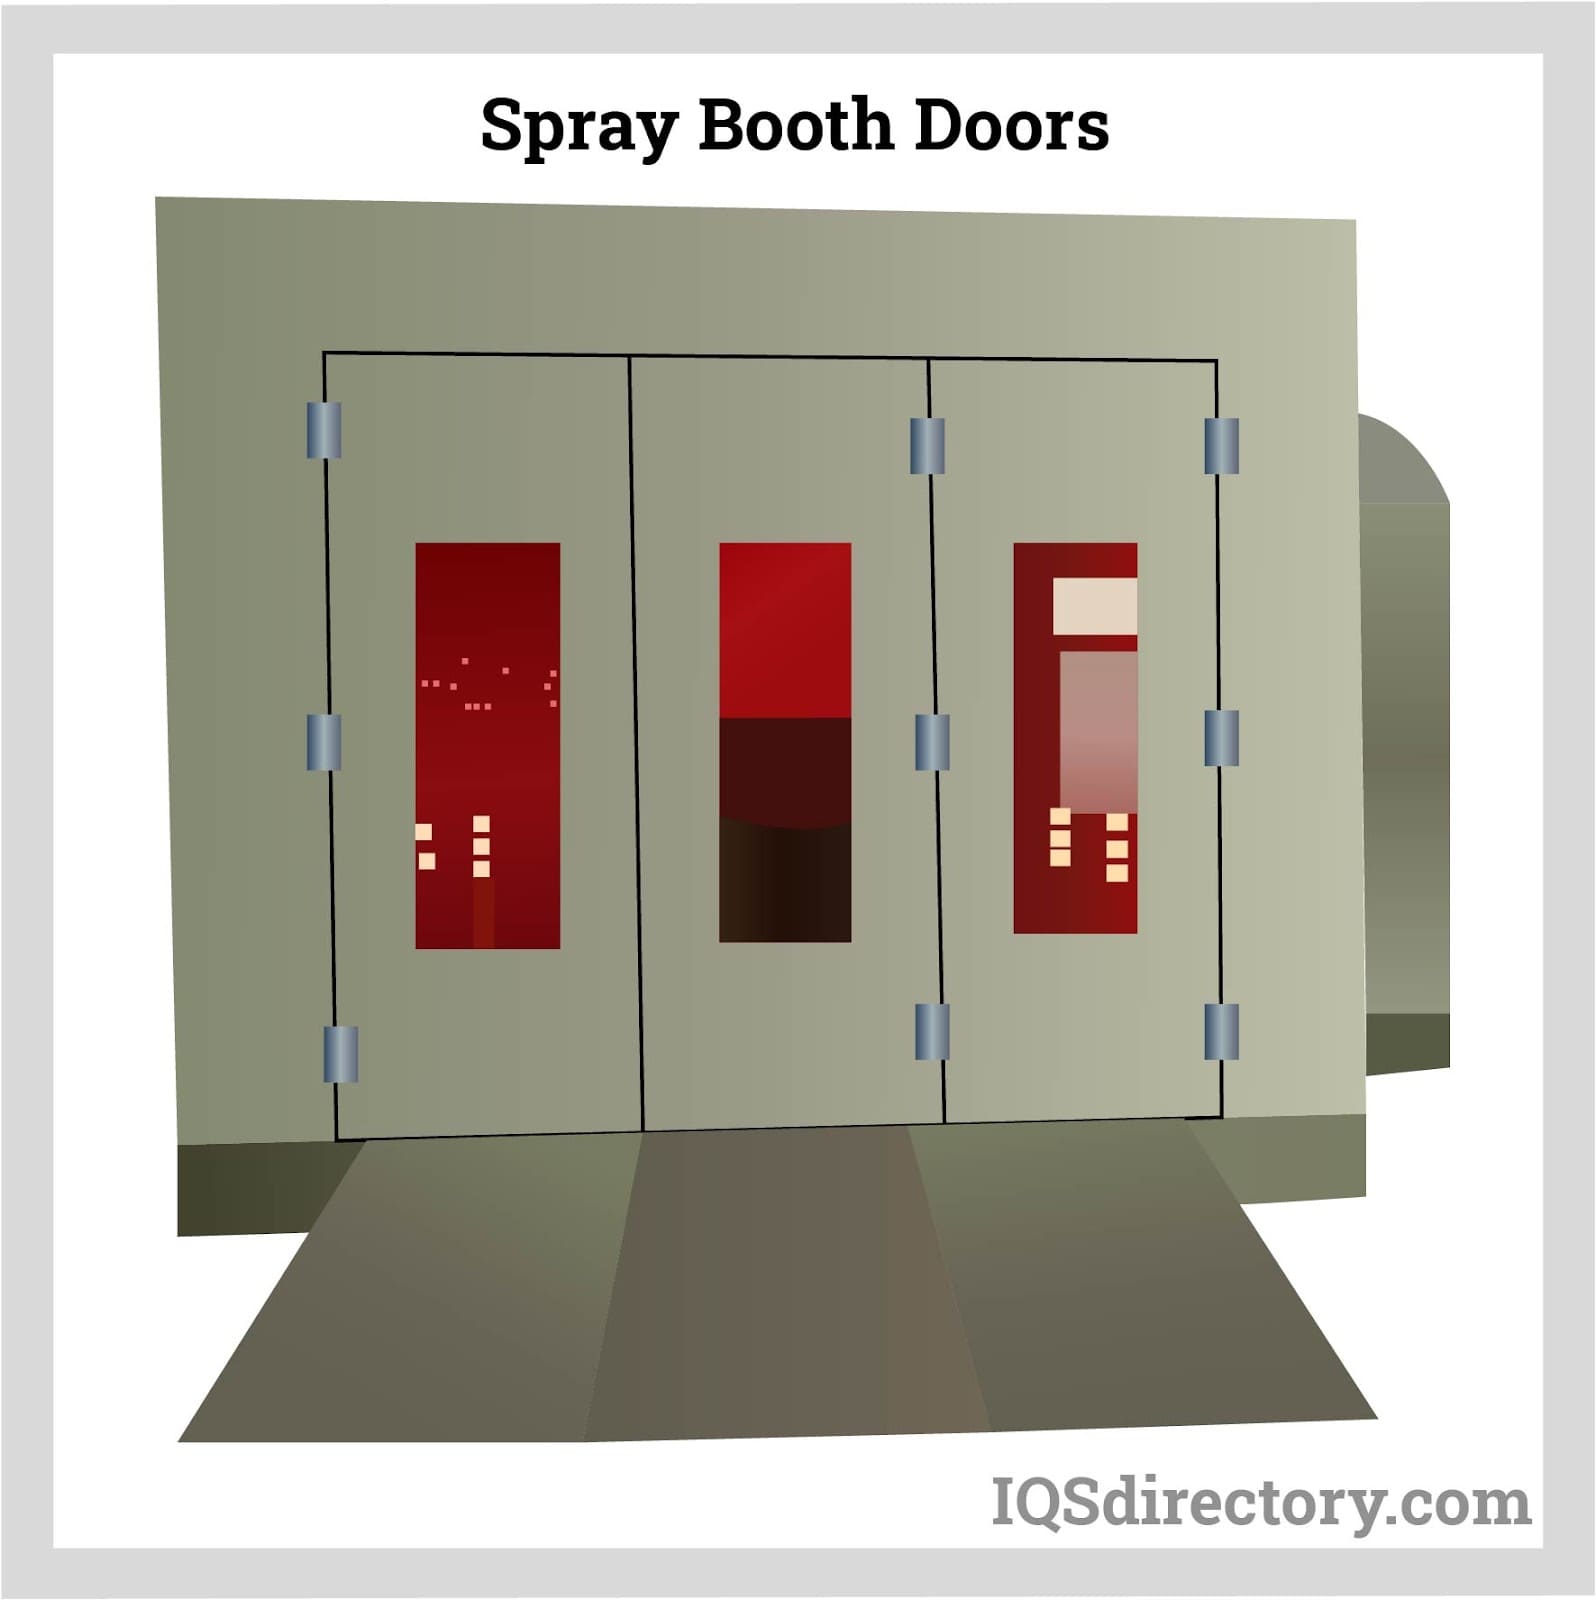 Spray Booth Doors